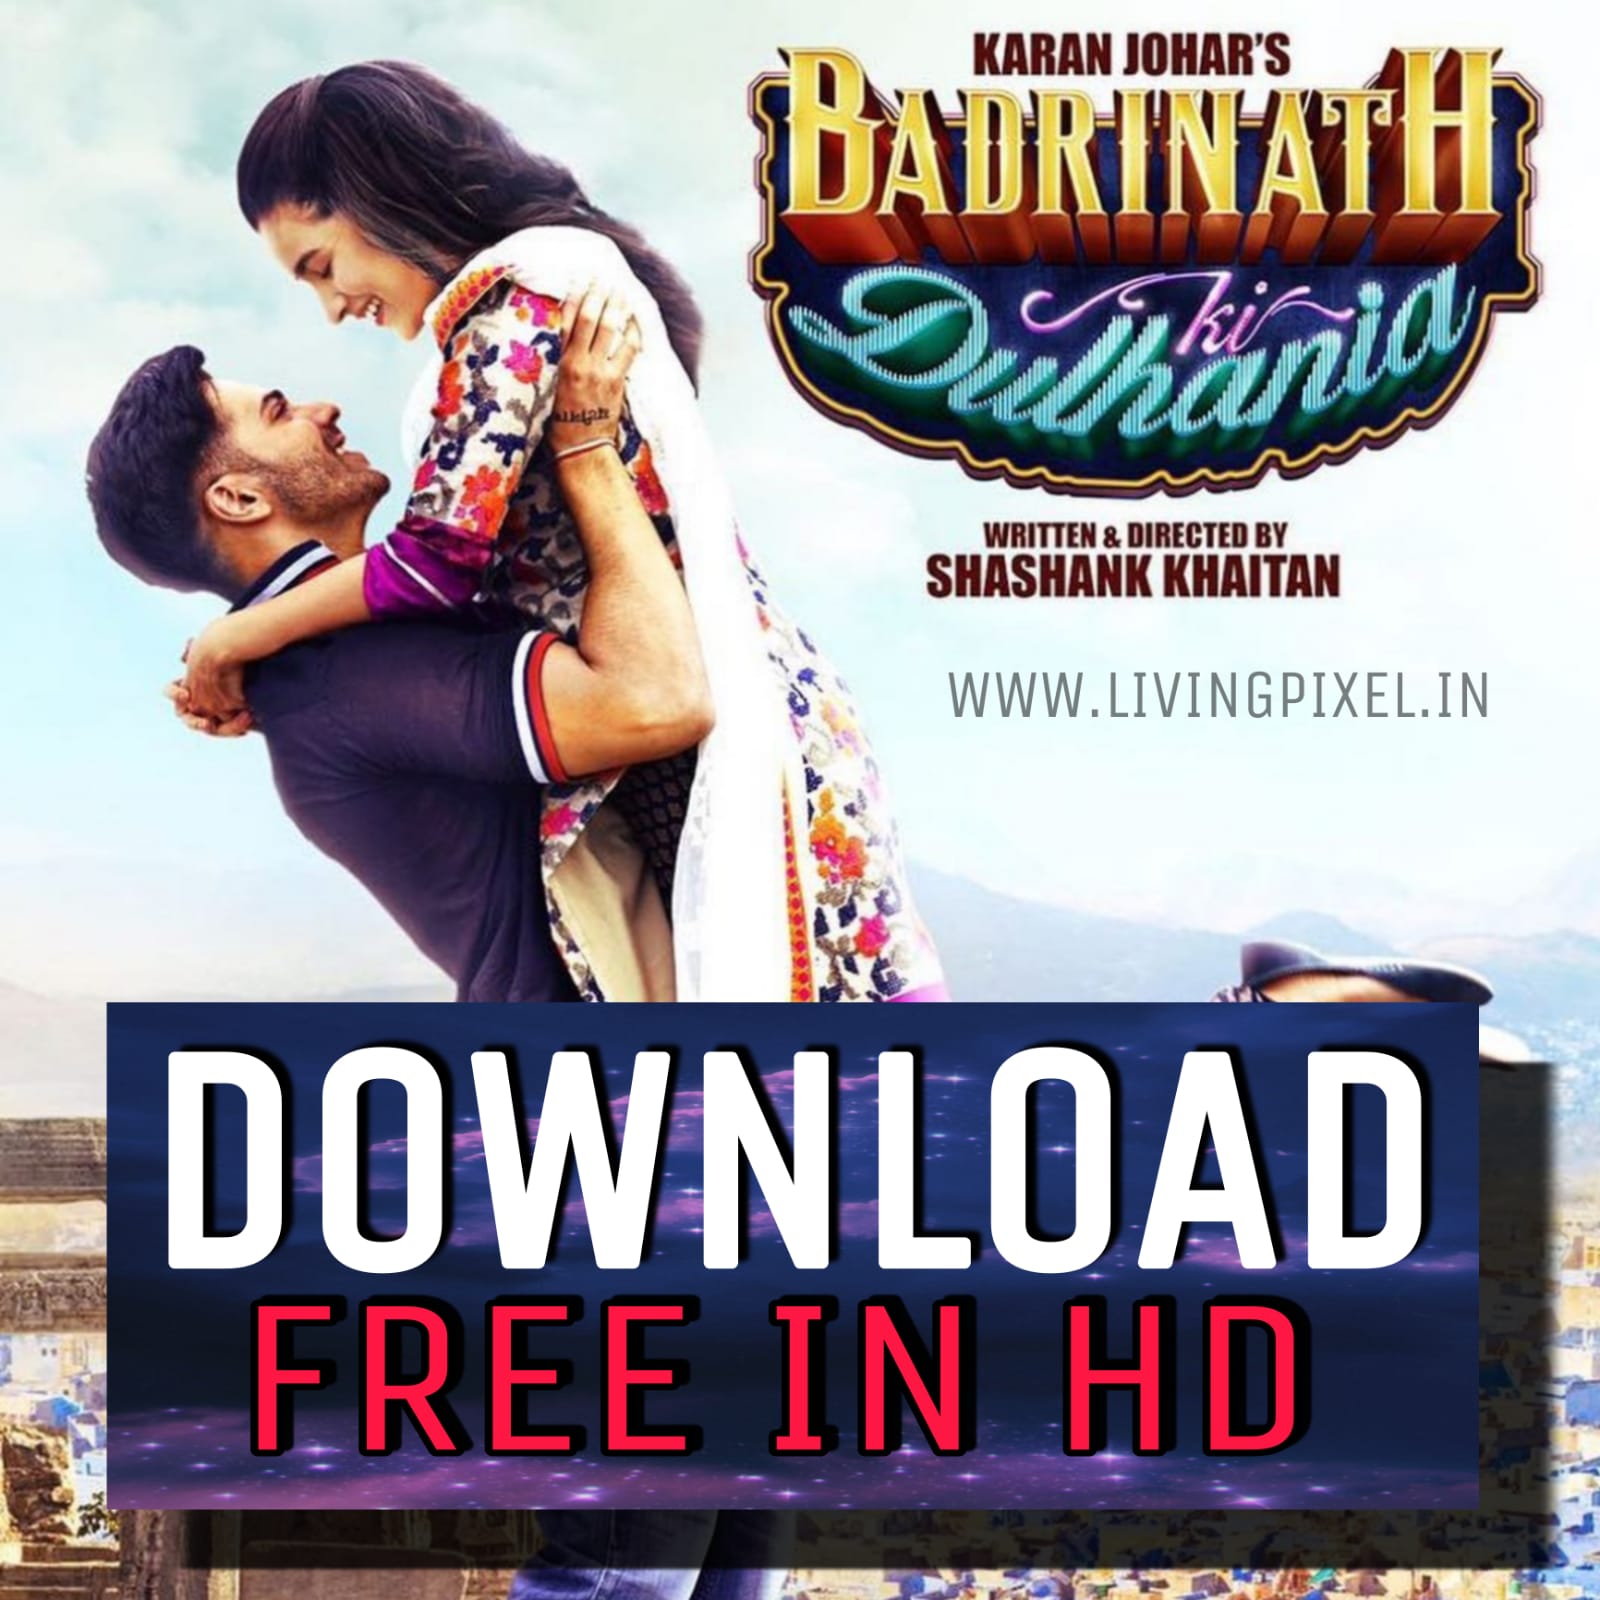 Badrinath Ki Dulhania full movie download mp4 hd Coolmoviez in HD